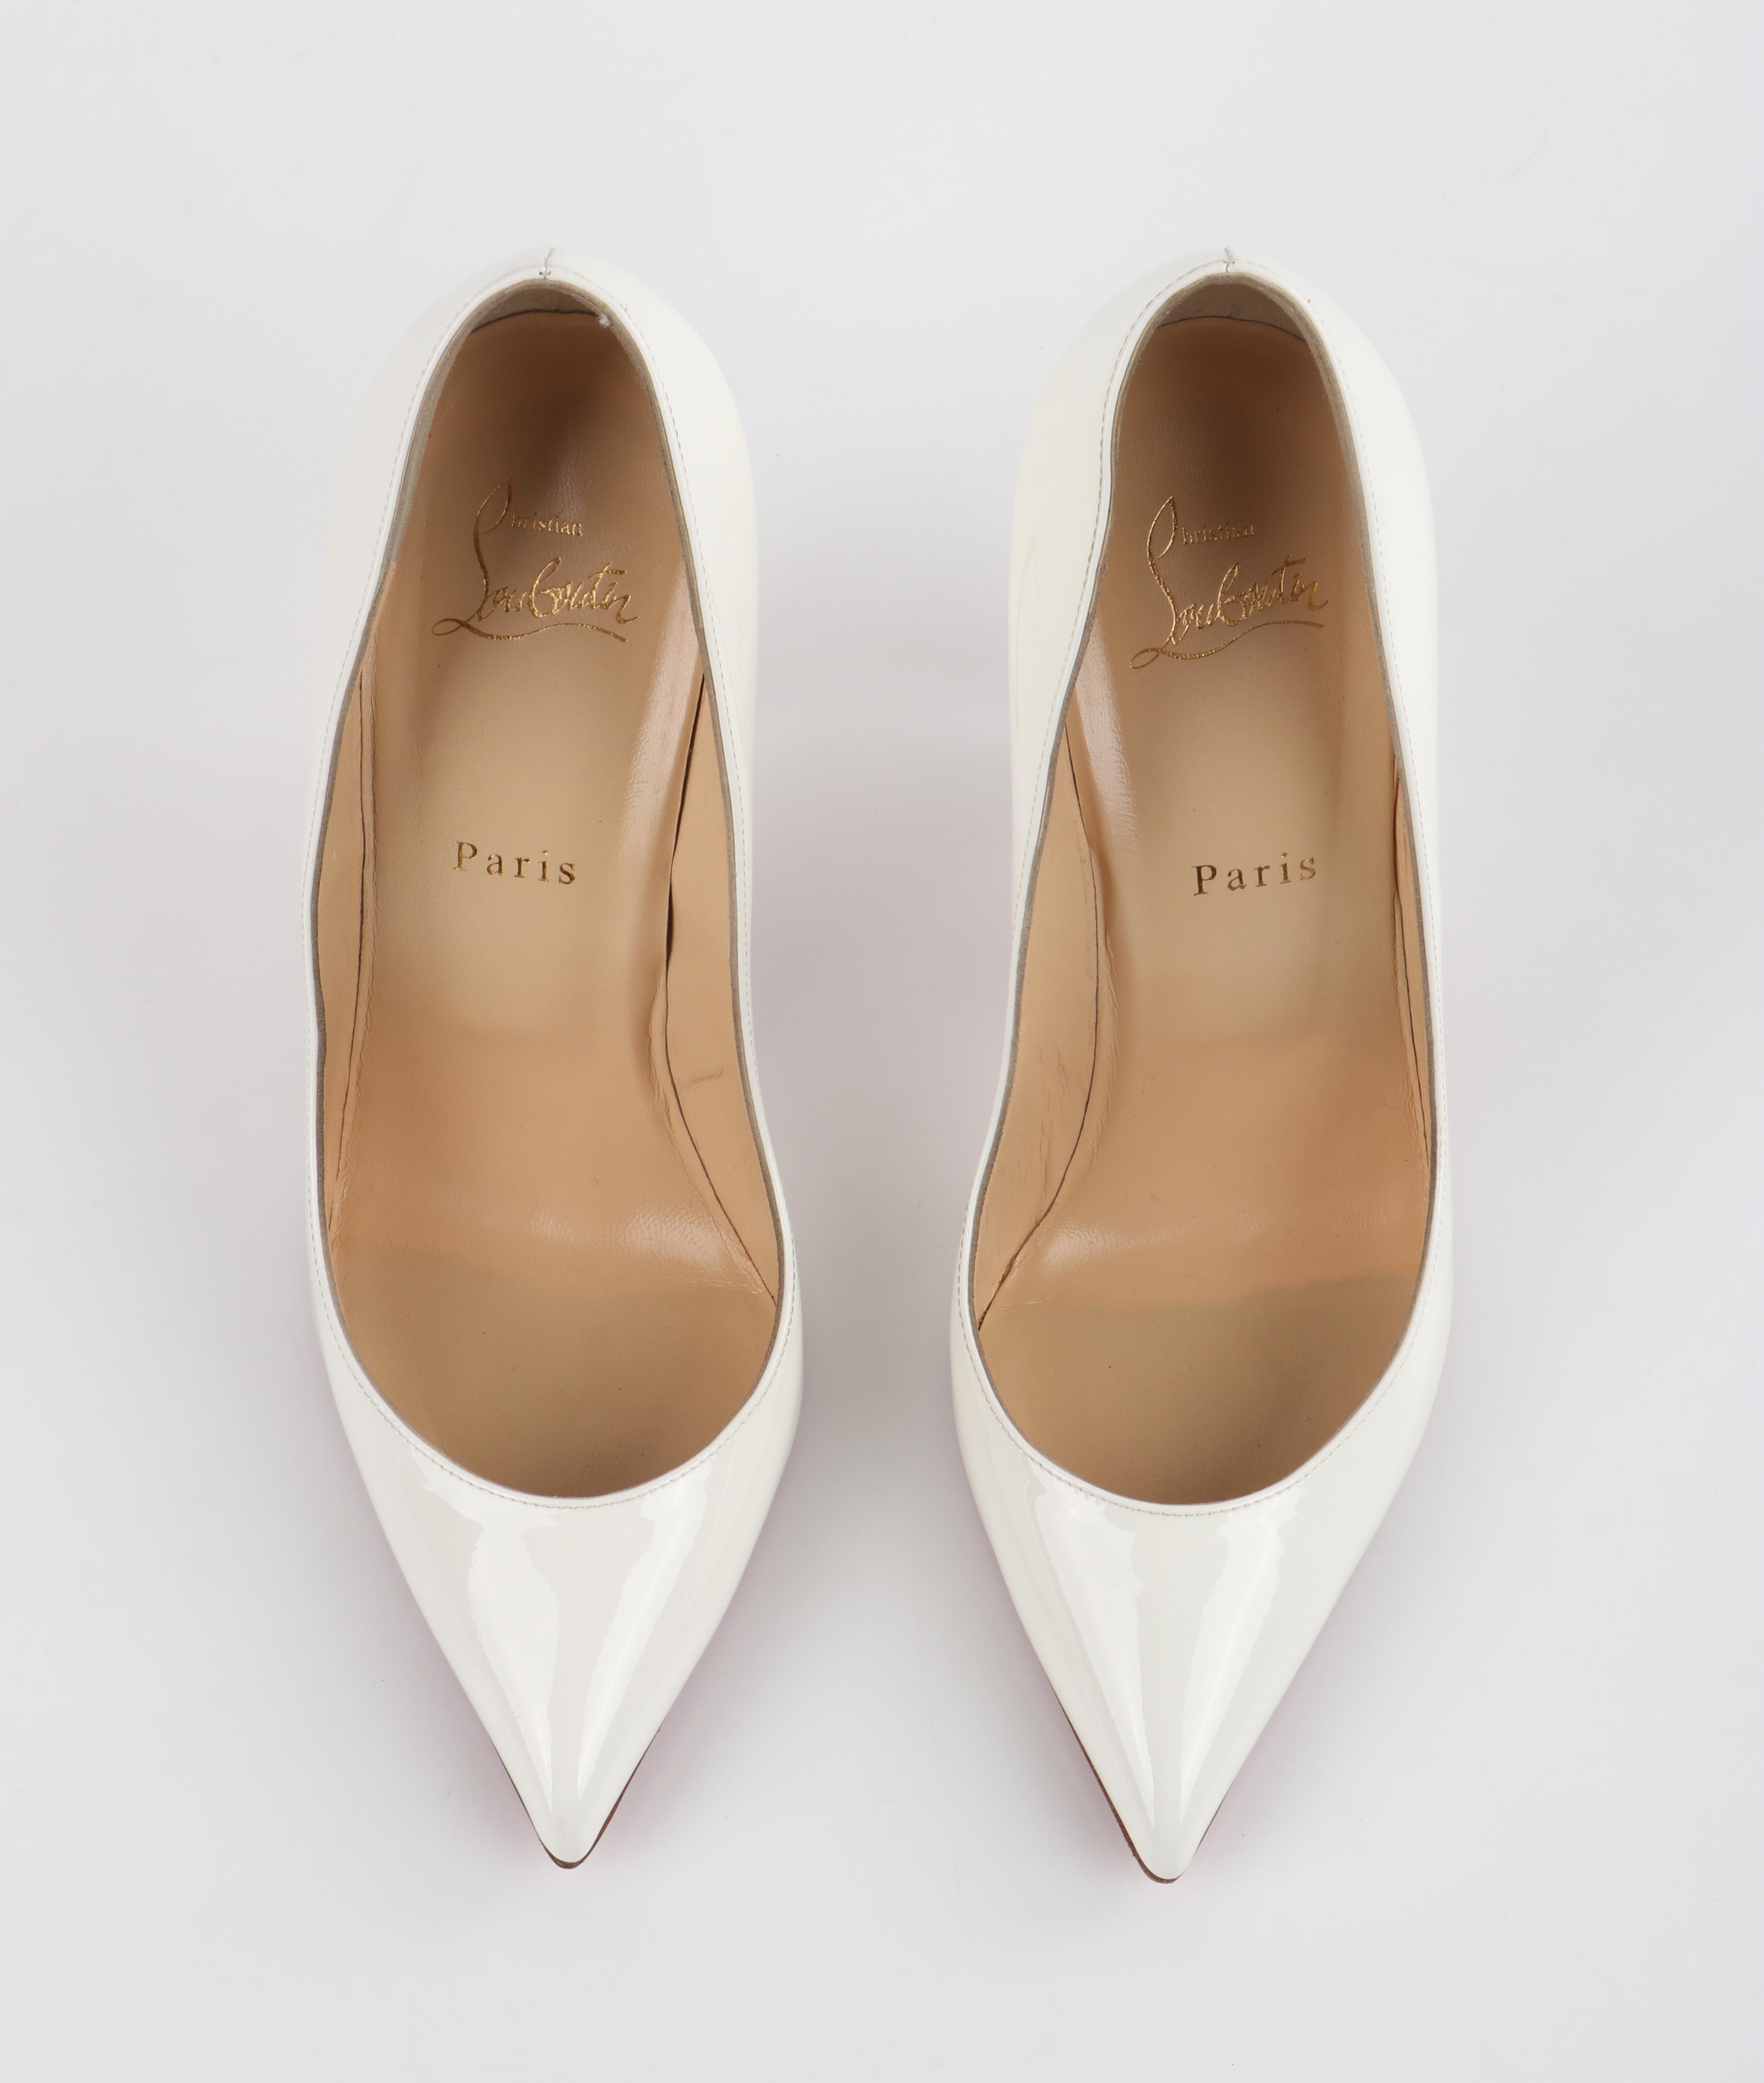 CHRISTIAN LOUBOUTIN “So Kate” 120 White Patent Leather Stiletto High Heel Pumps 2